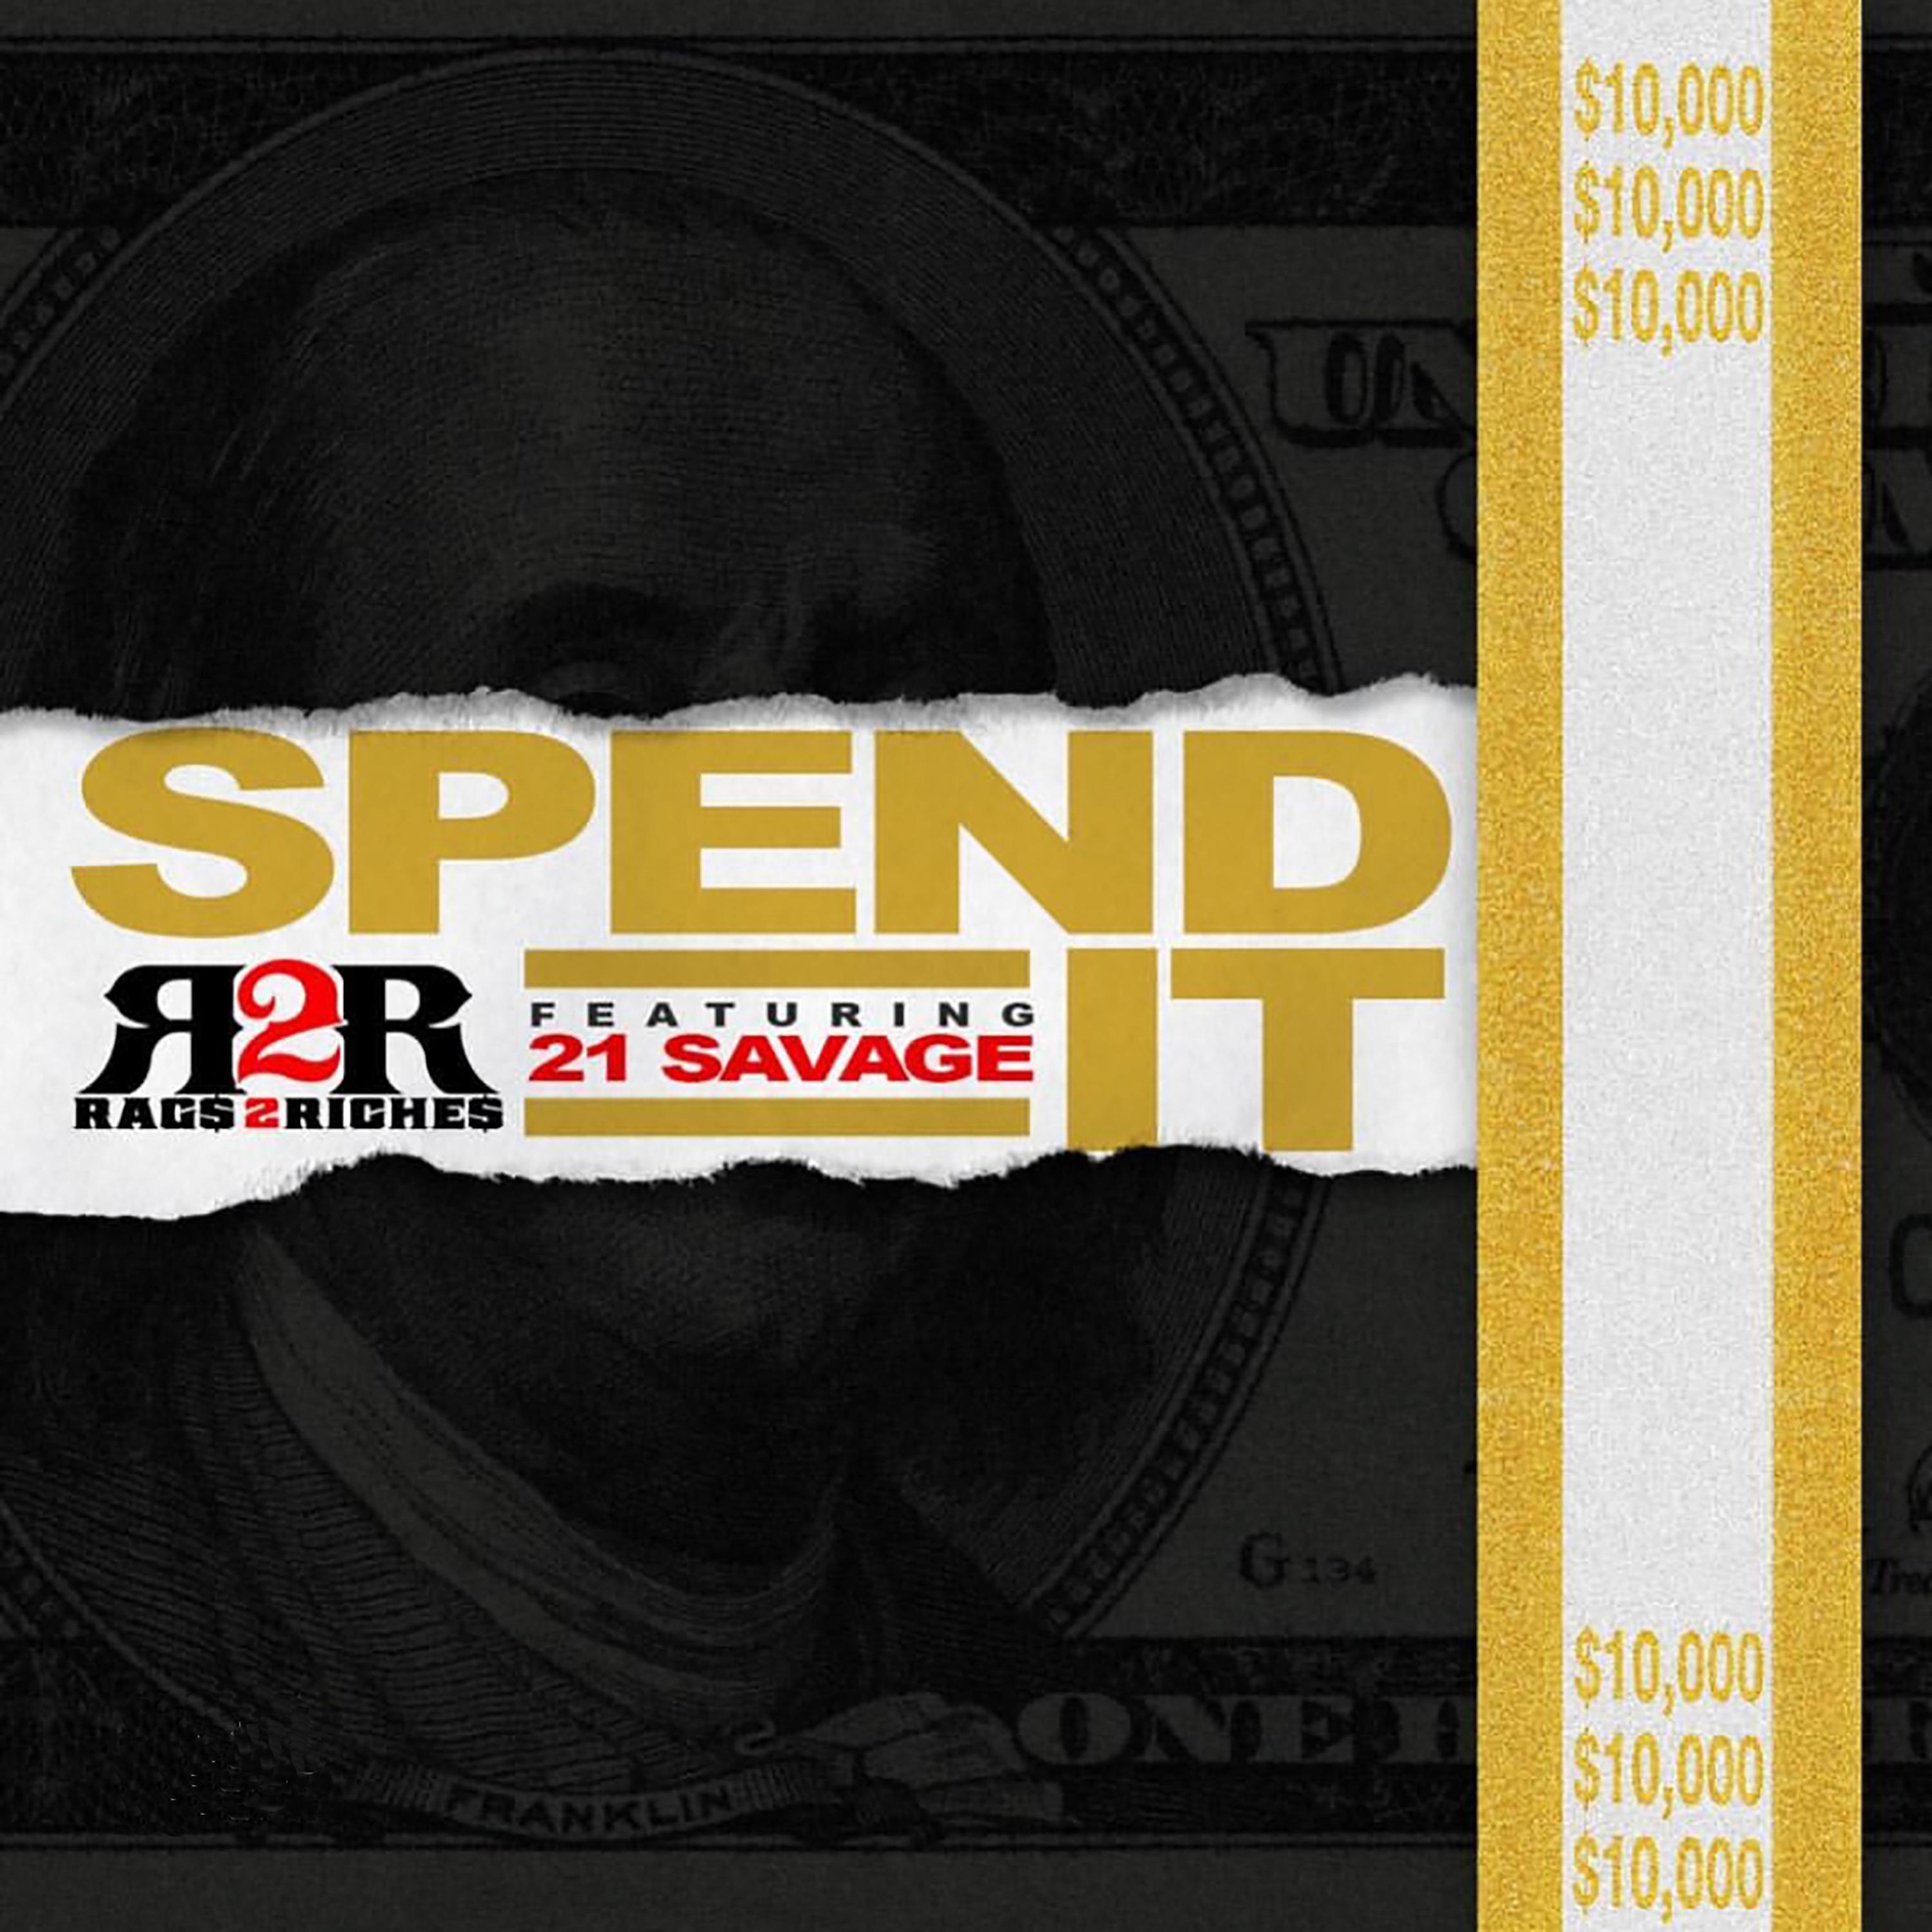 Spend It